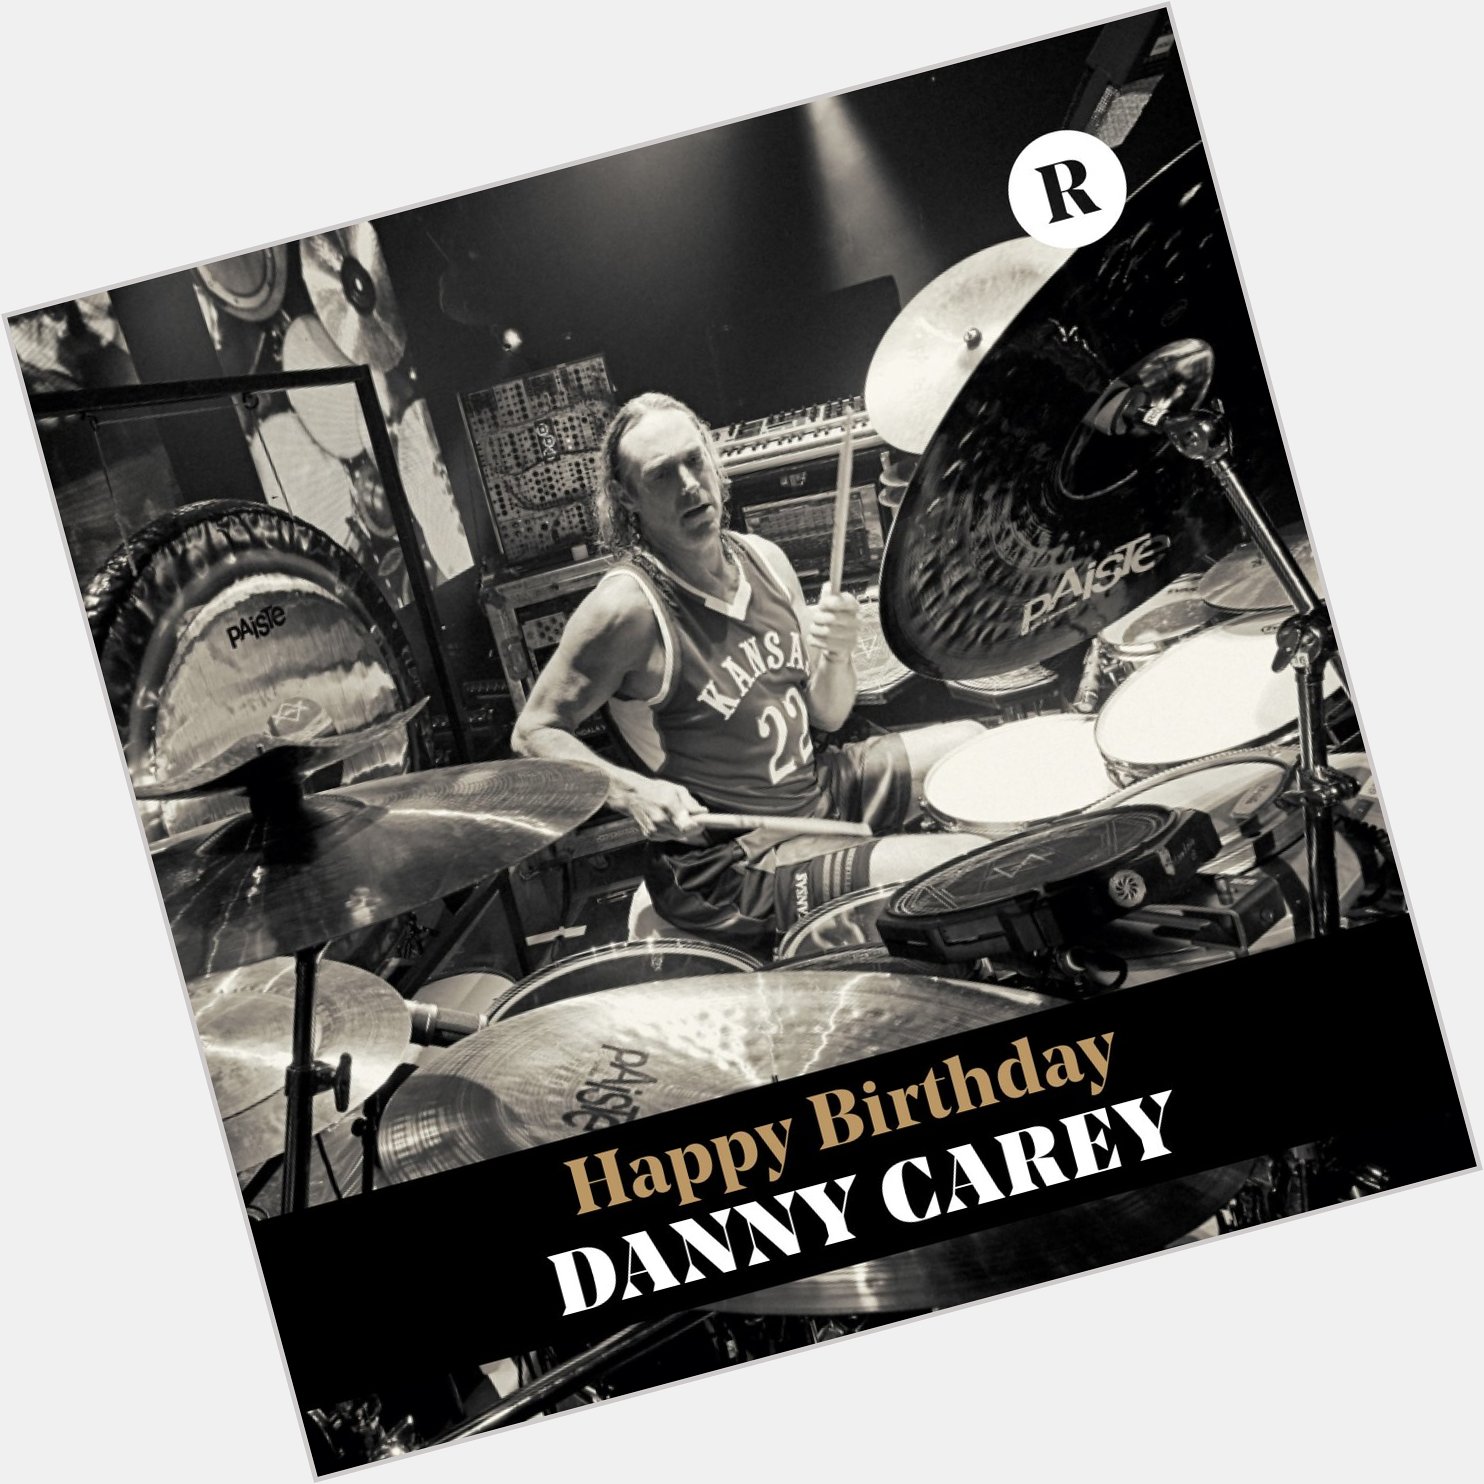 Happy birthday, Danny Carey! 